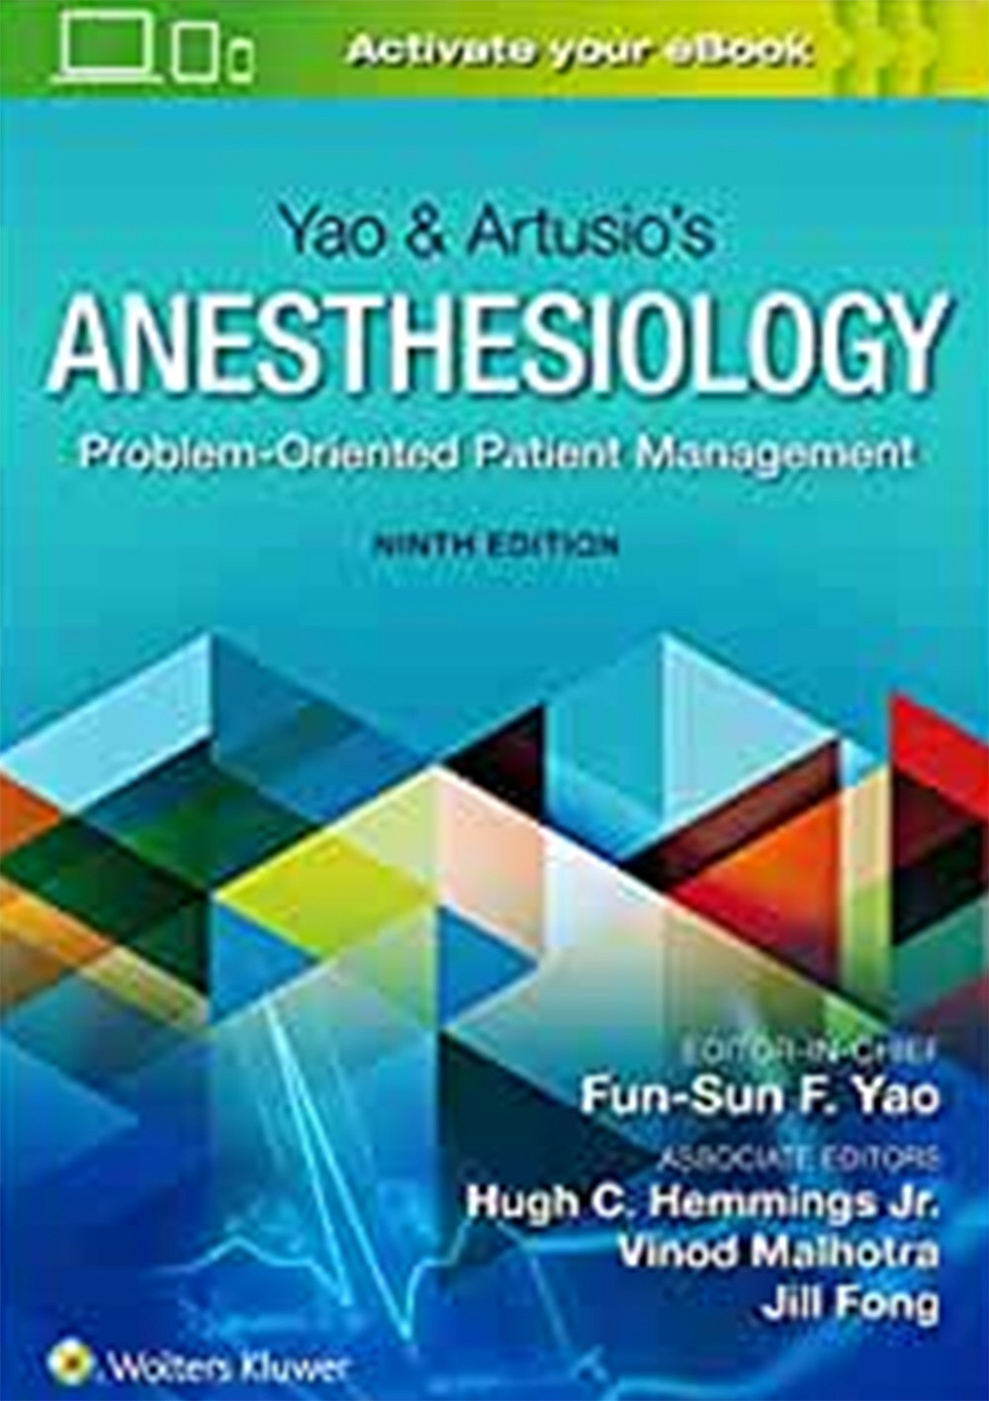 Yao & Artusio’s Anesthesiology...